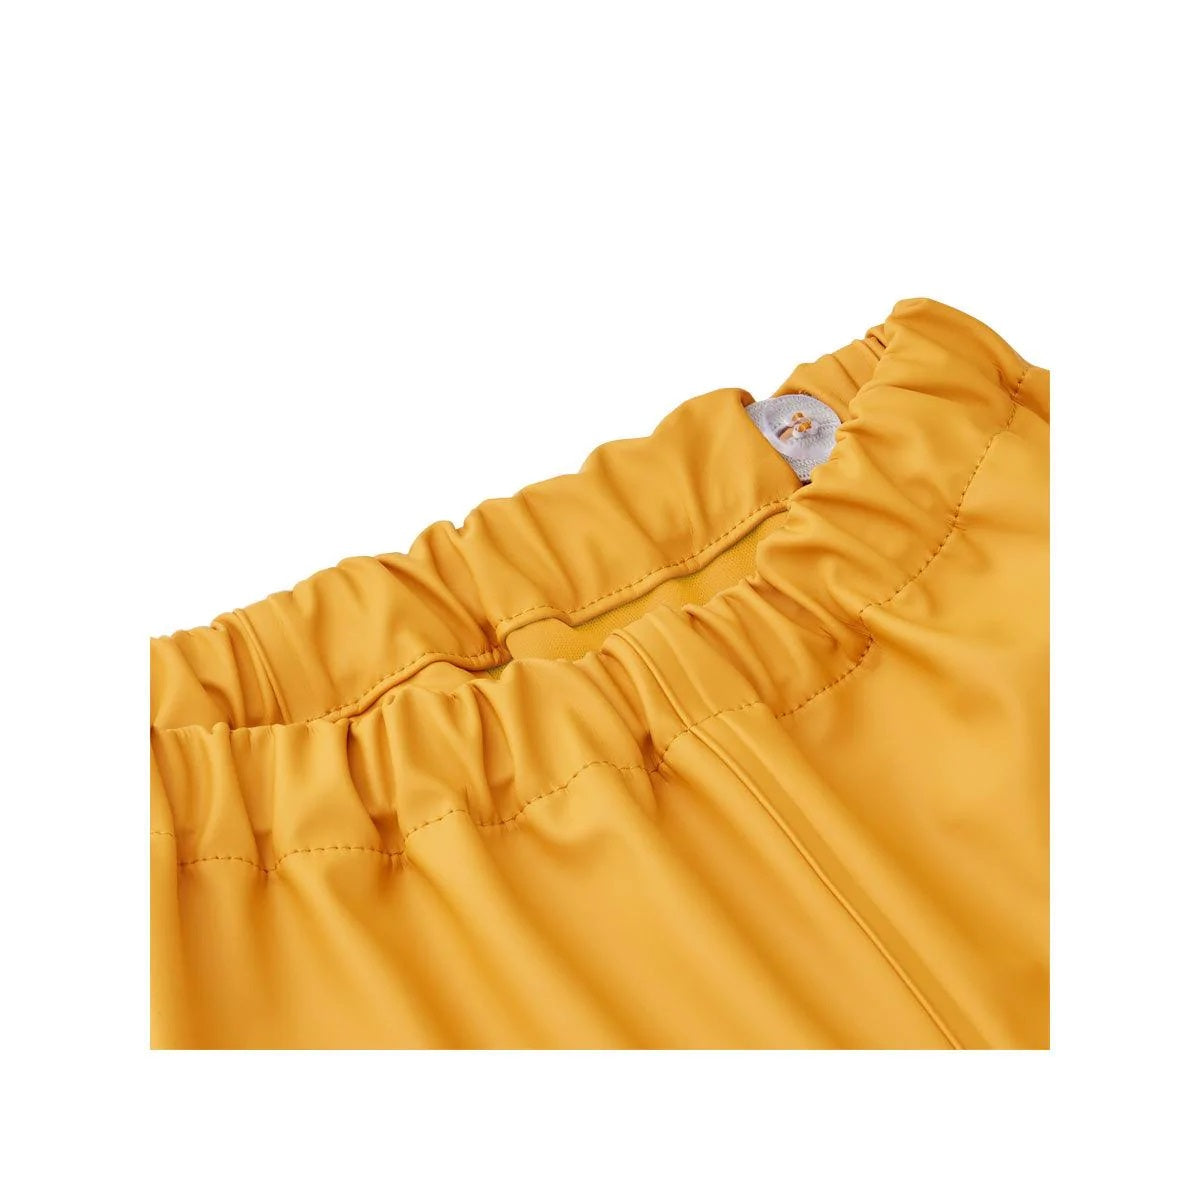 Liewood Moby Rainwear Set - Yellow Mellow